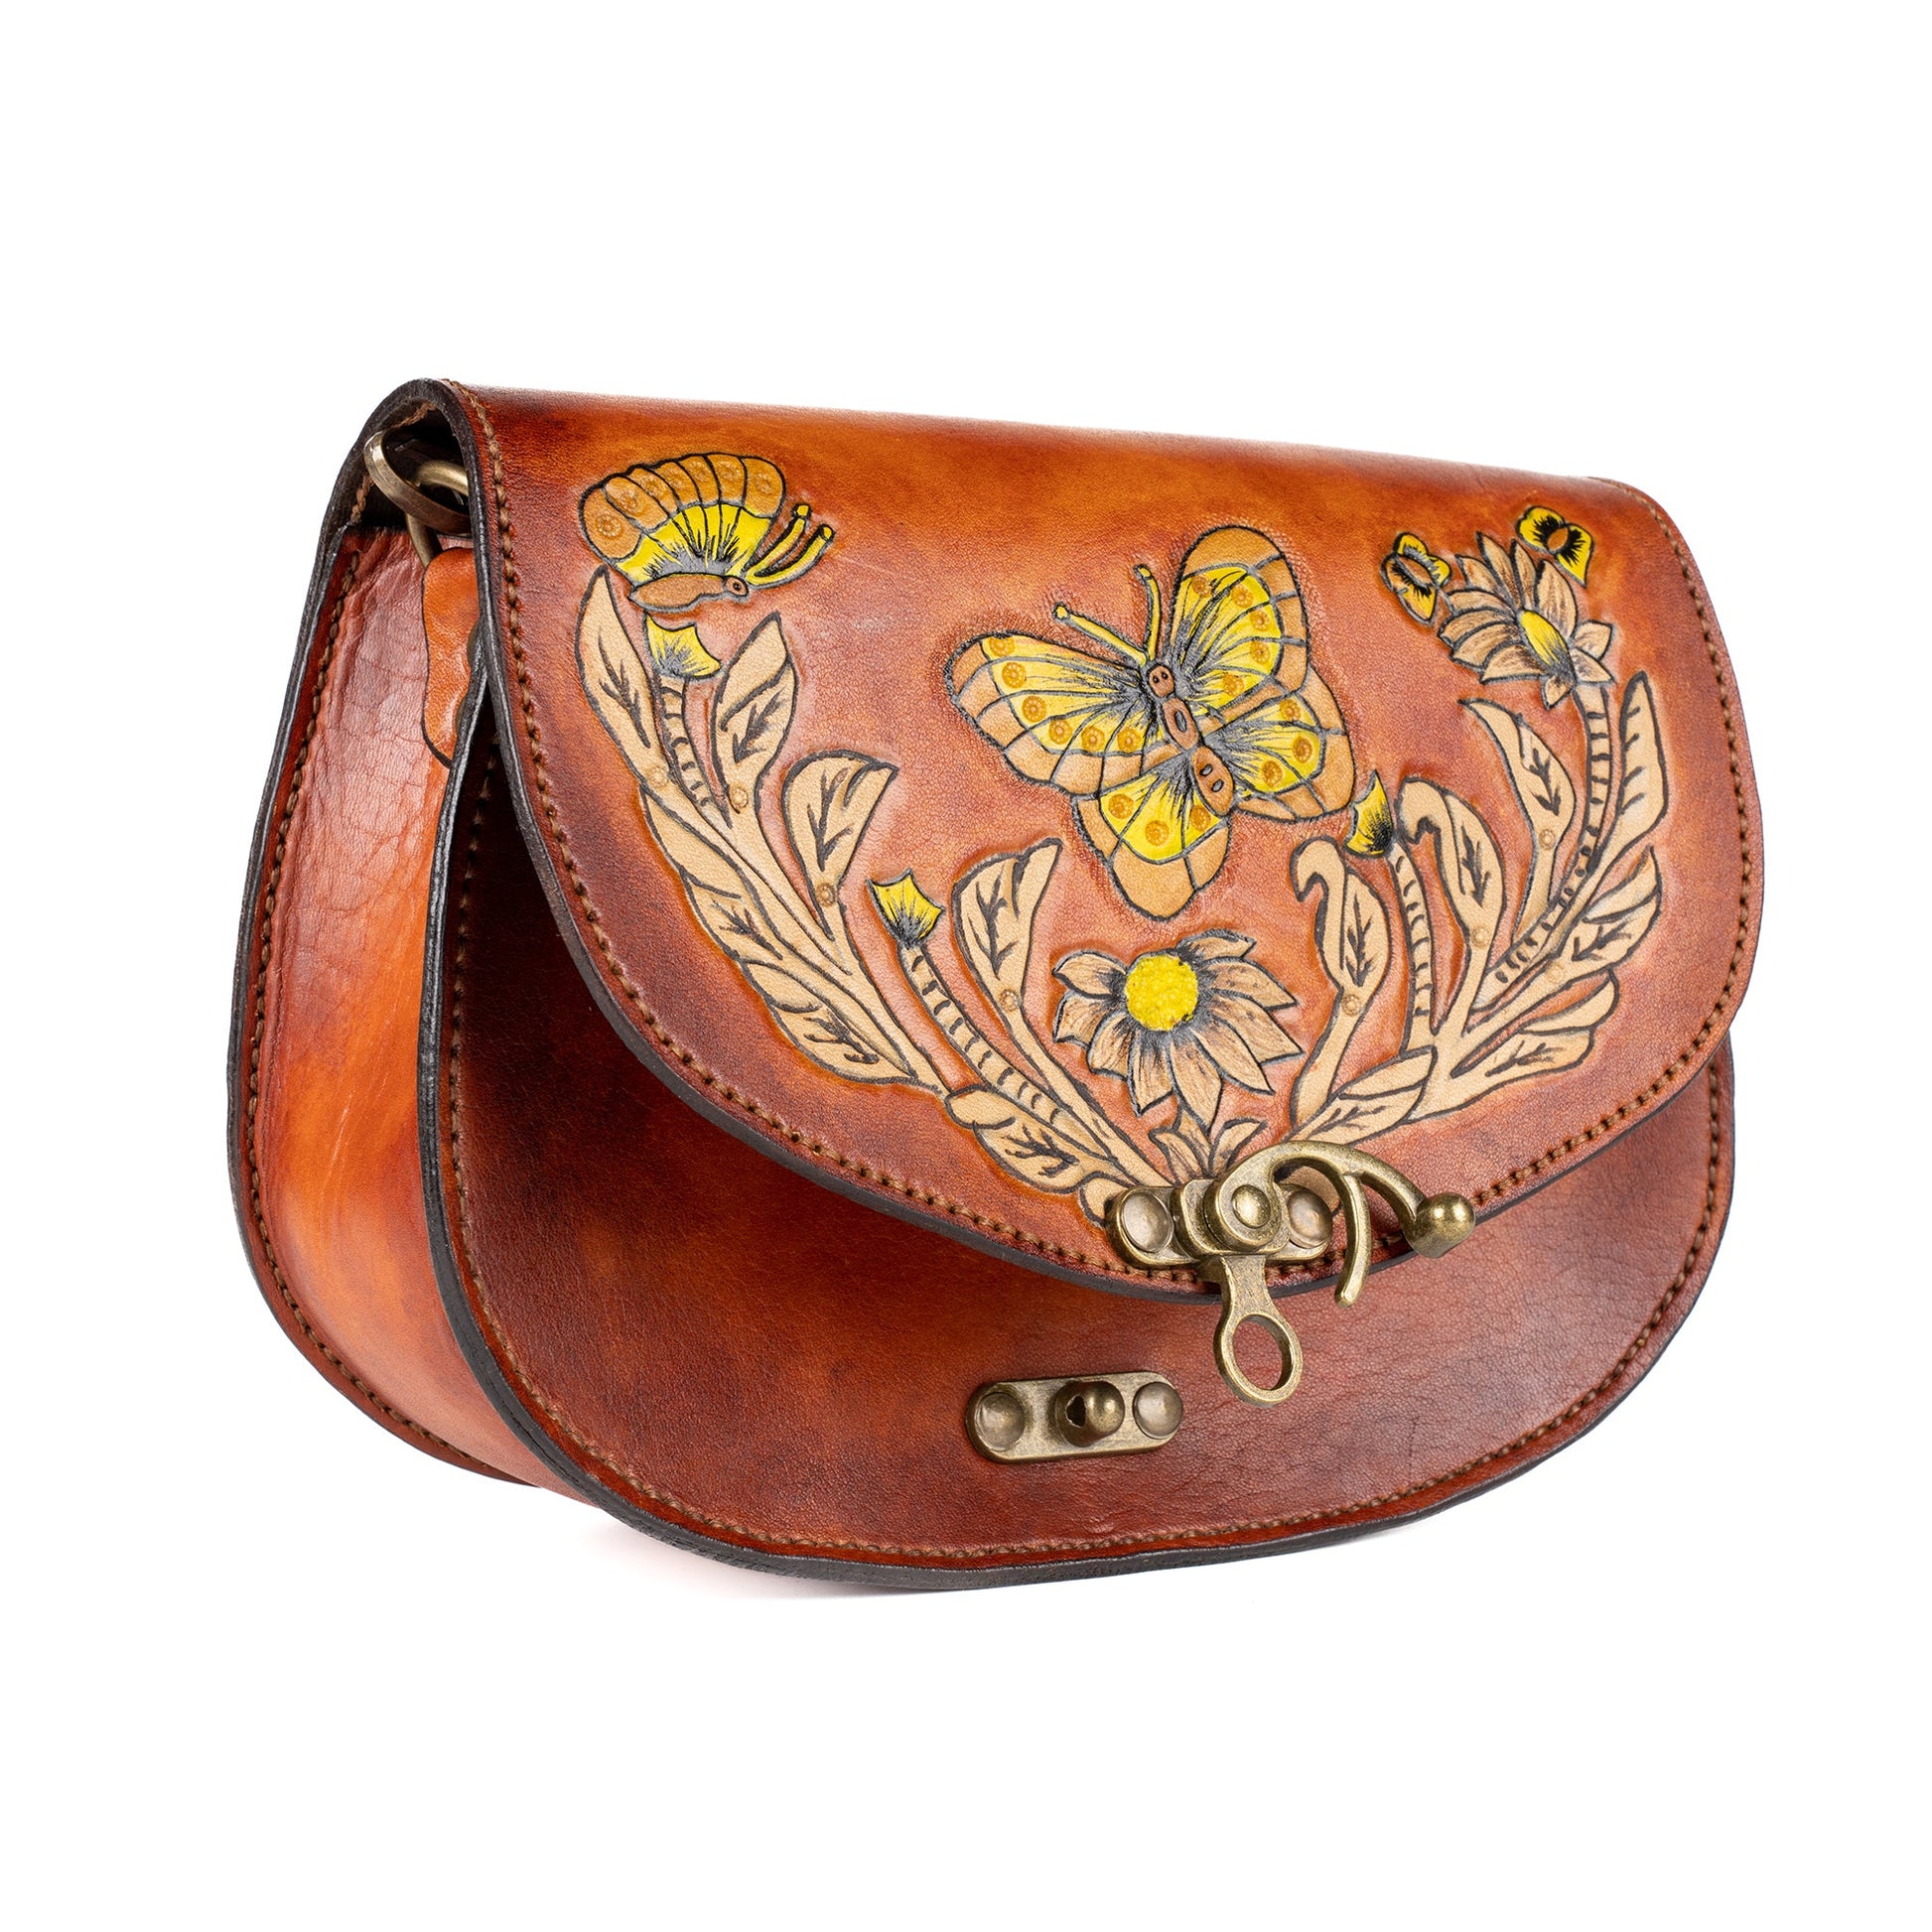 Kilidos Leather Carved & Crafted Hand Bag - Handbags Zengoda Shop online from Artisan Brands